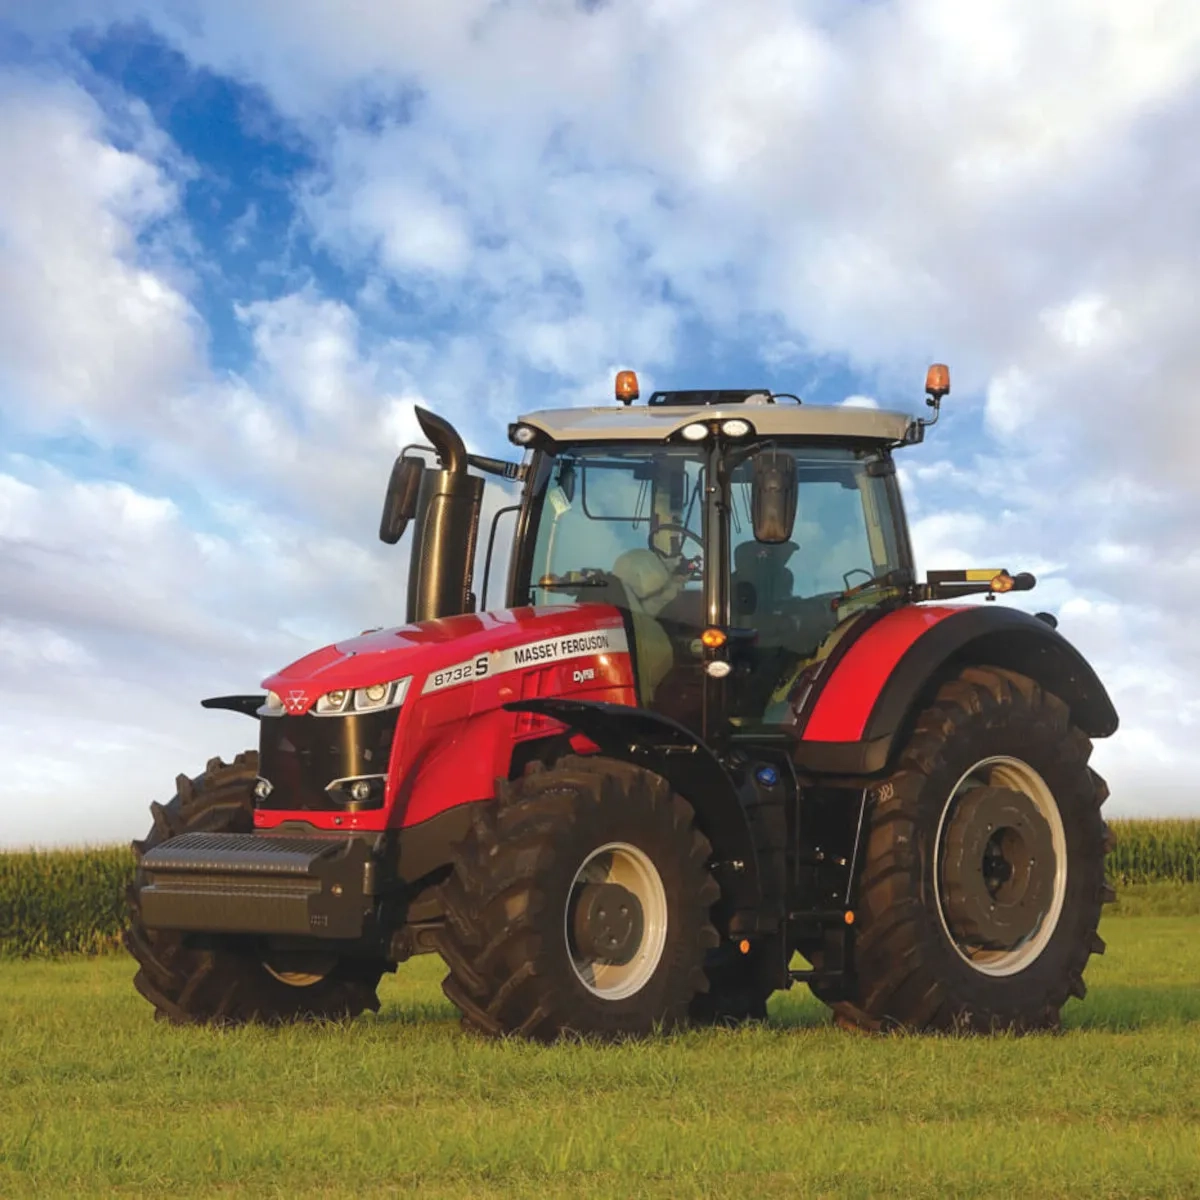 Is Massey Ferguson Still in the Tractor Business?